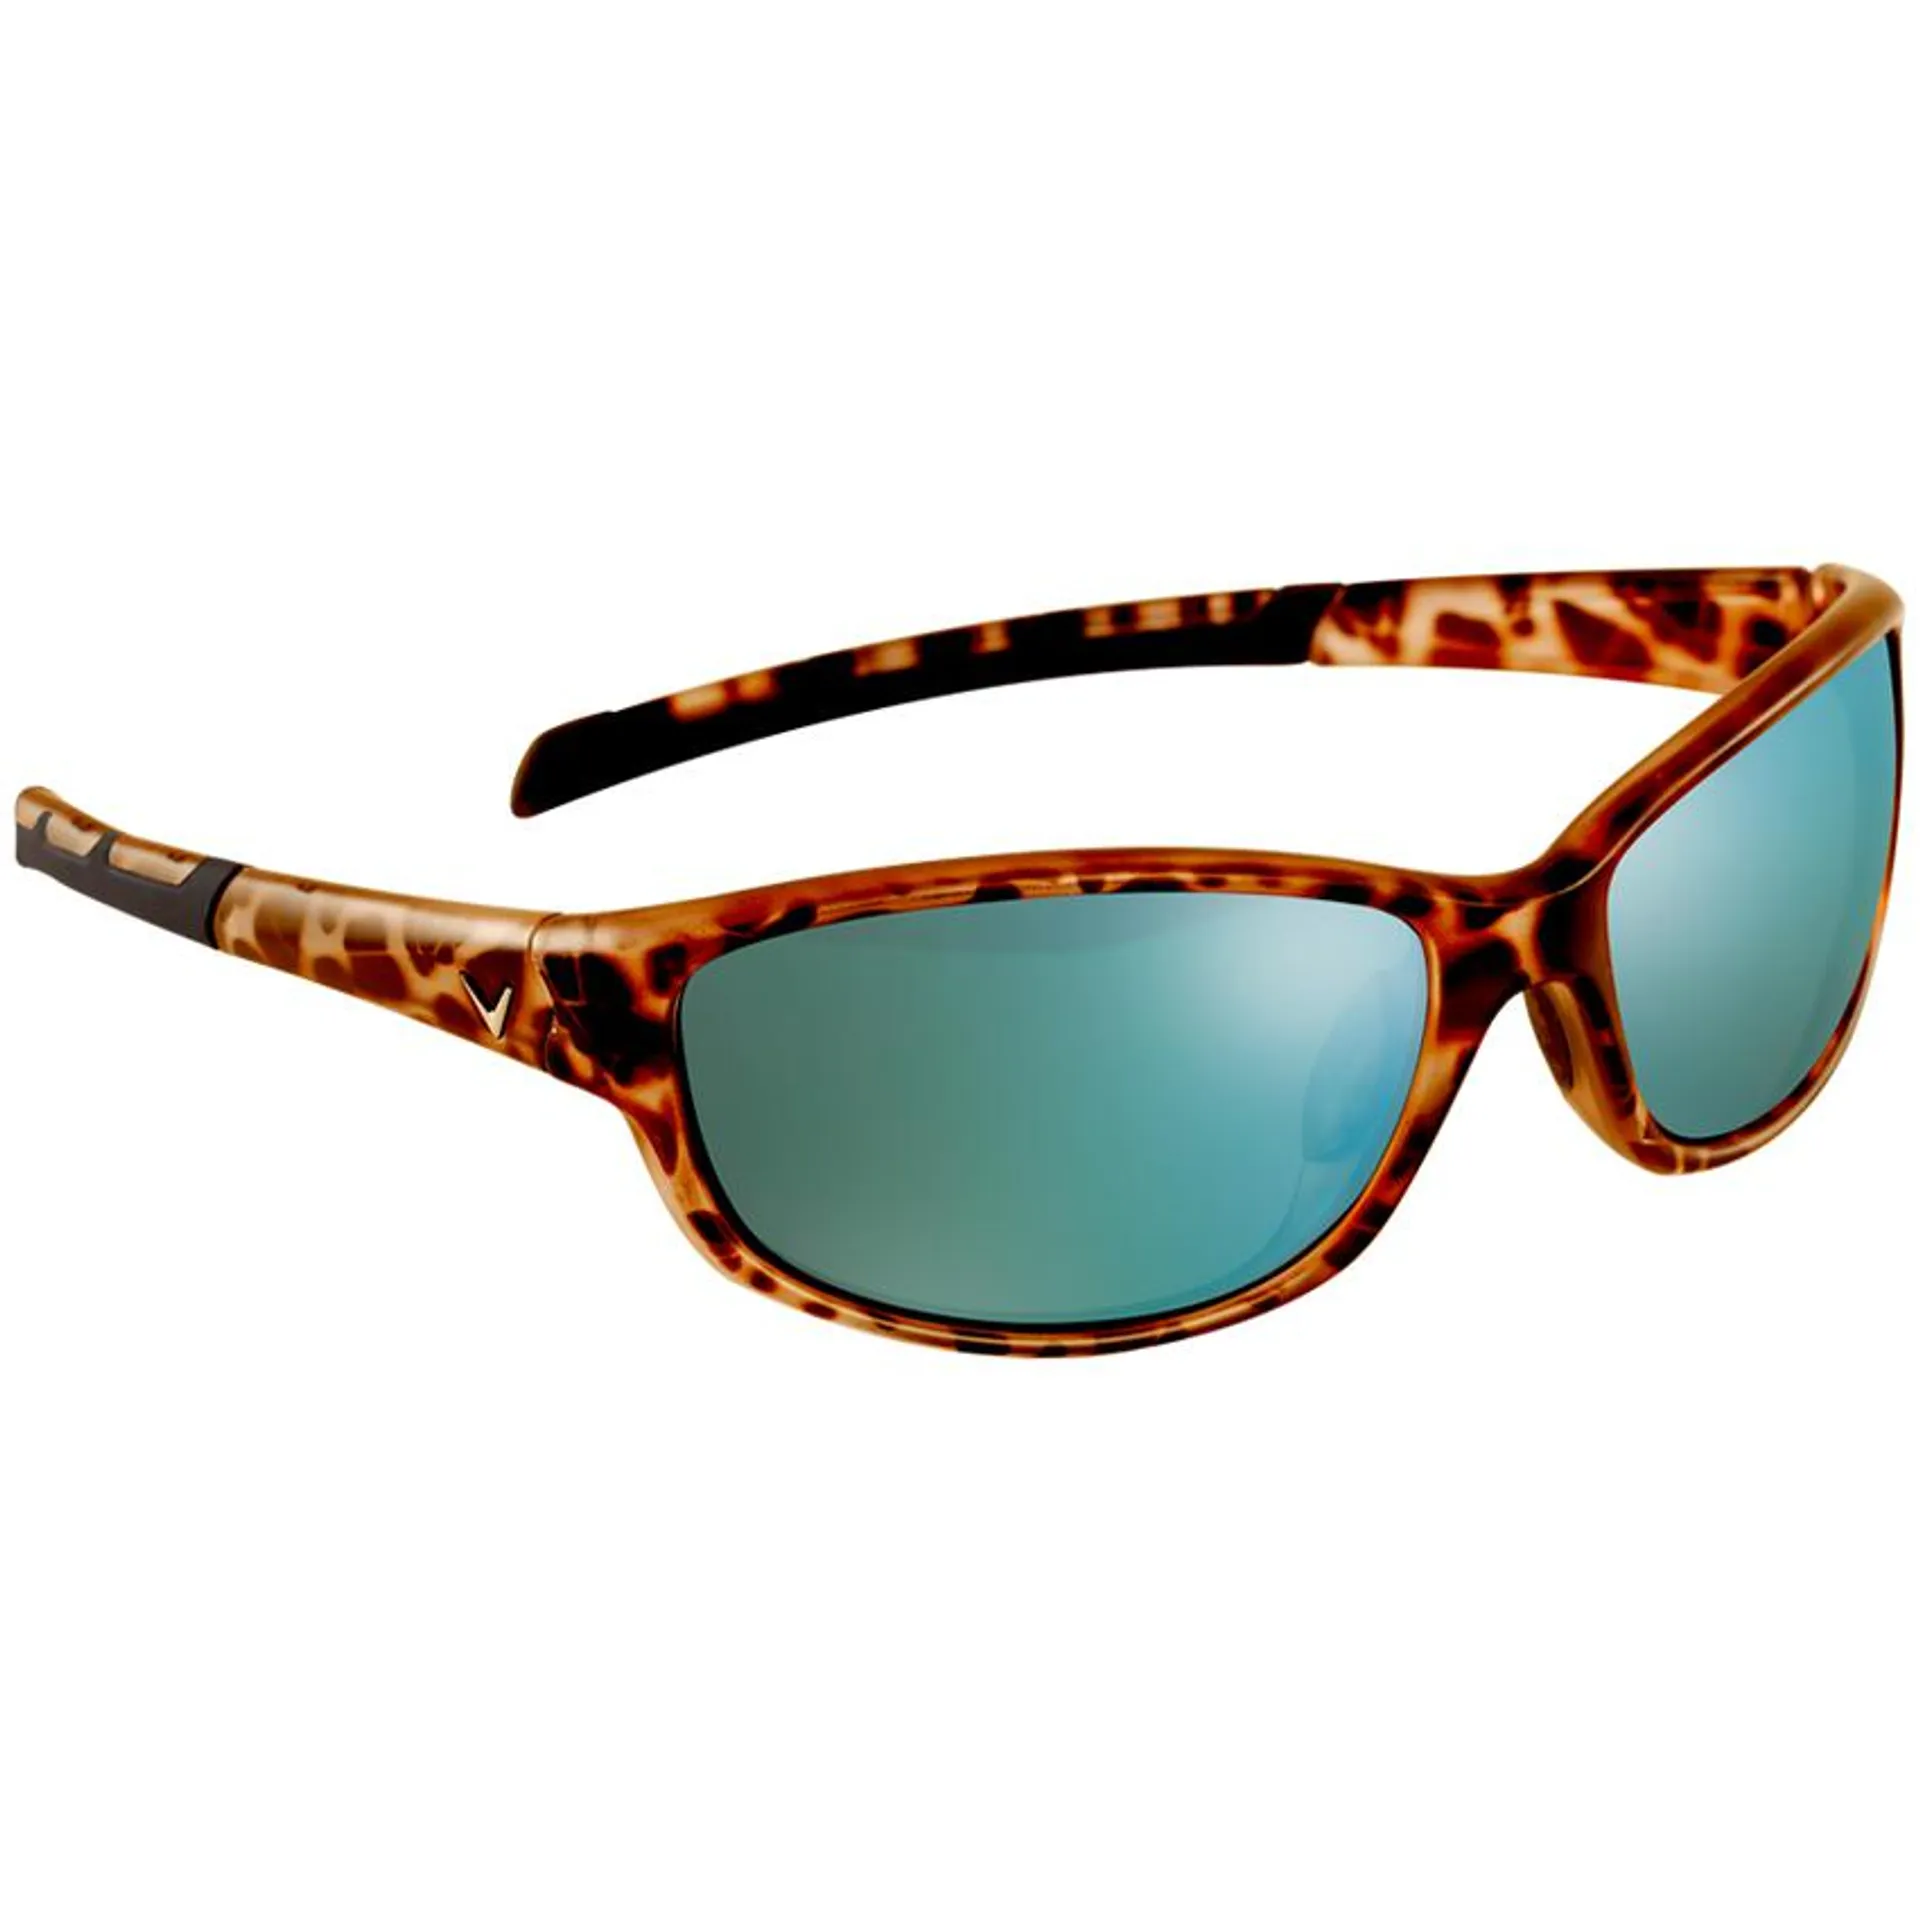 Women's Callaway Harrier Sunglasses